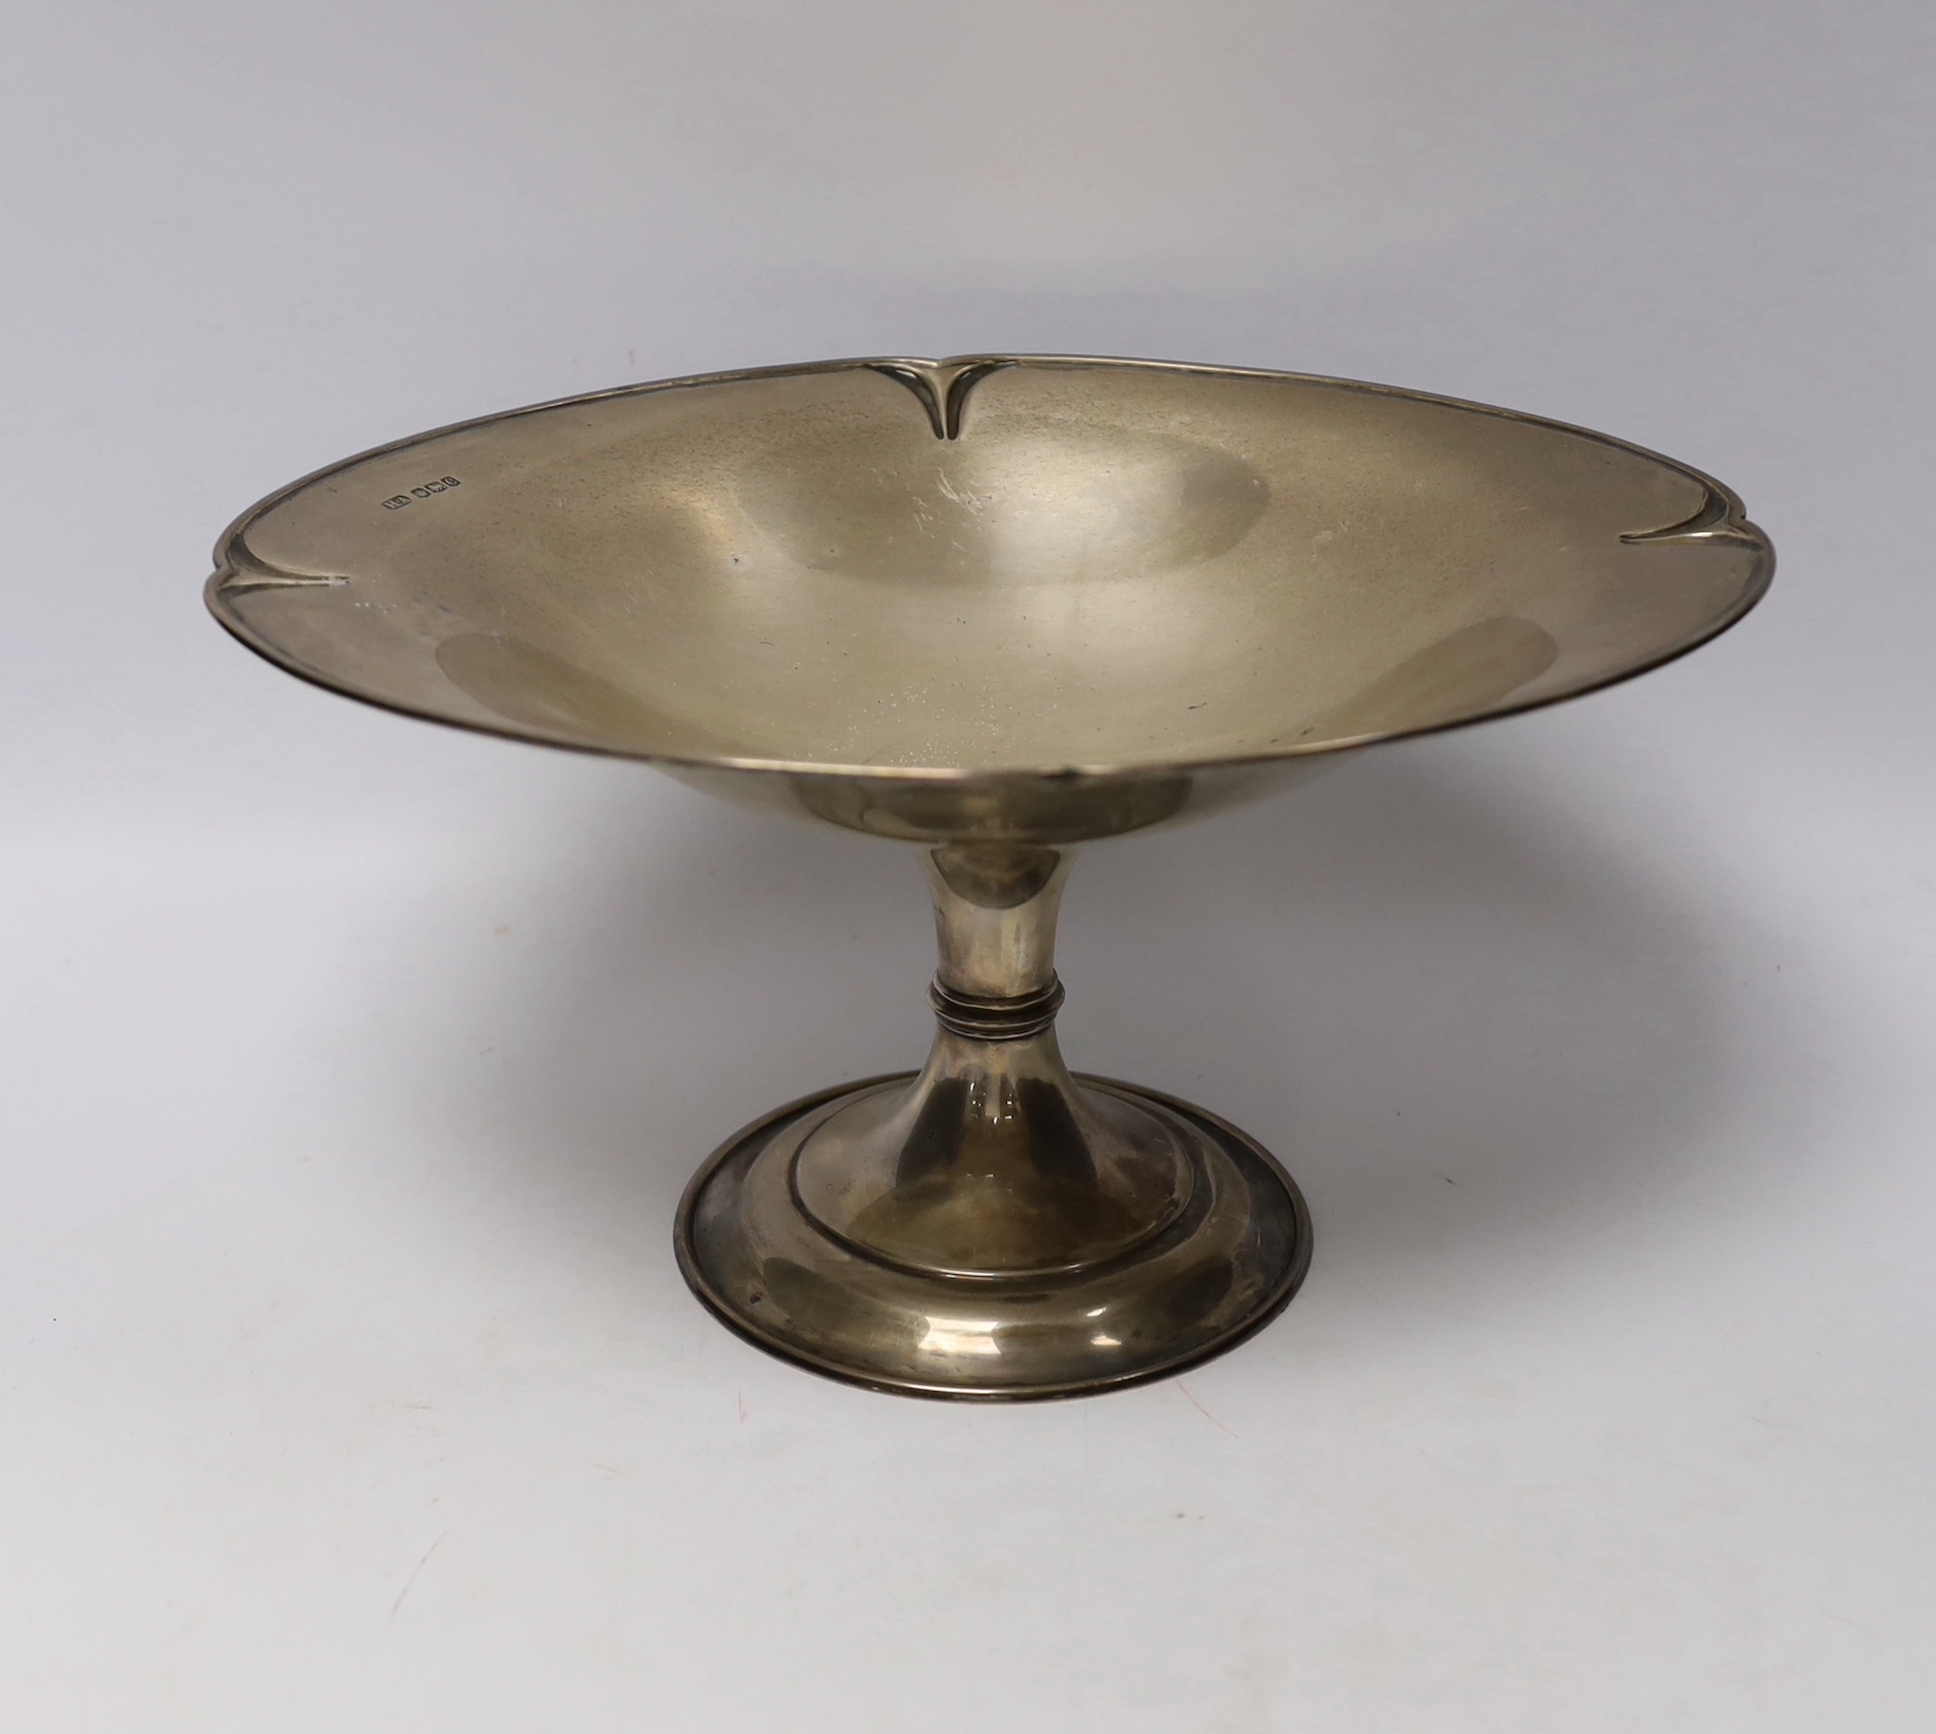 A George V silver oval pedestal fruit bowl, Atkin Brothers, Sheffield, 1920, diameter 28cm